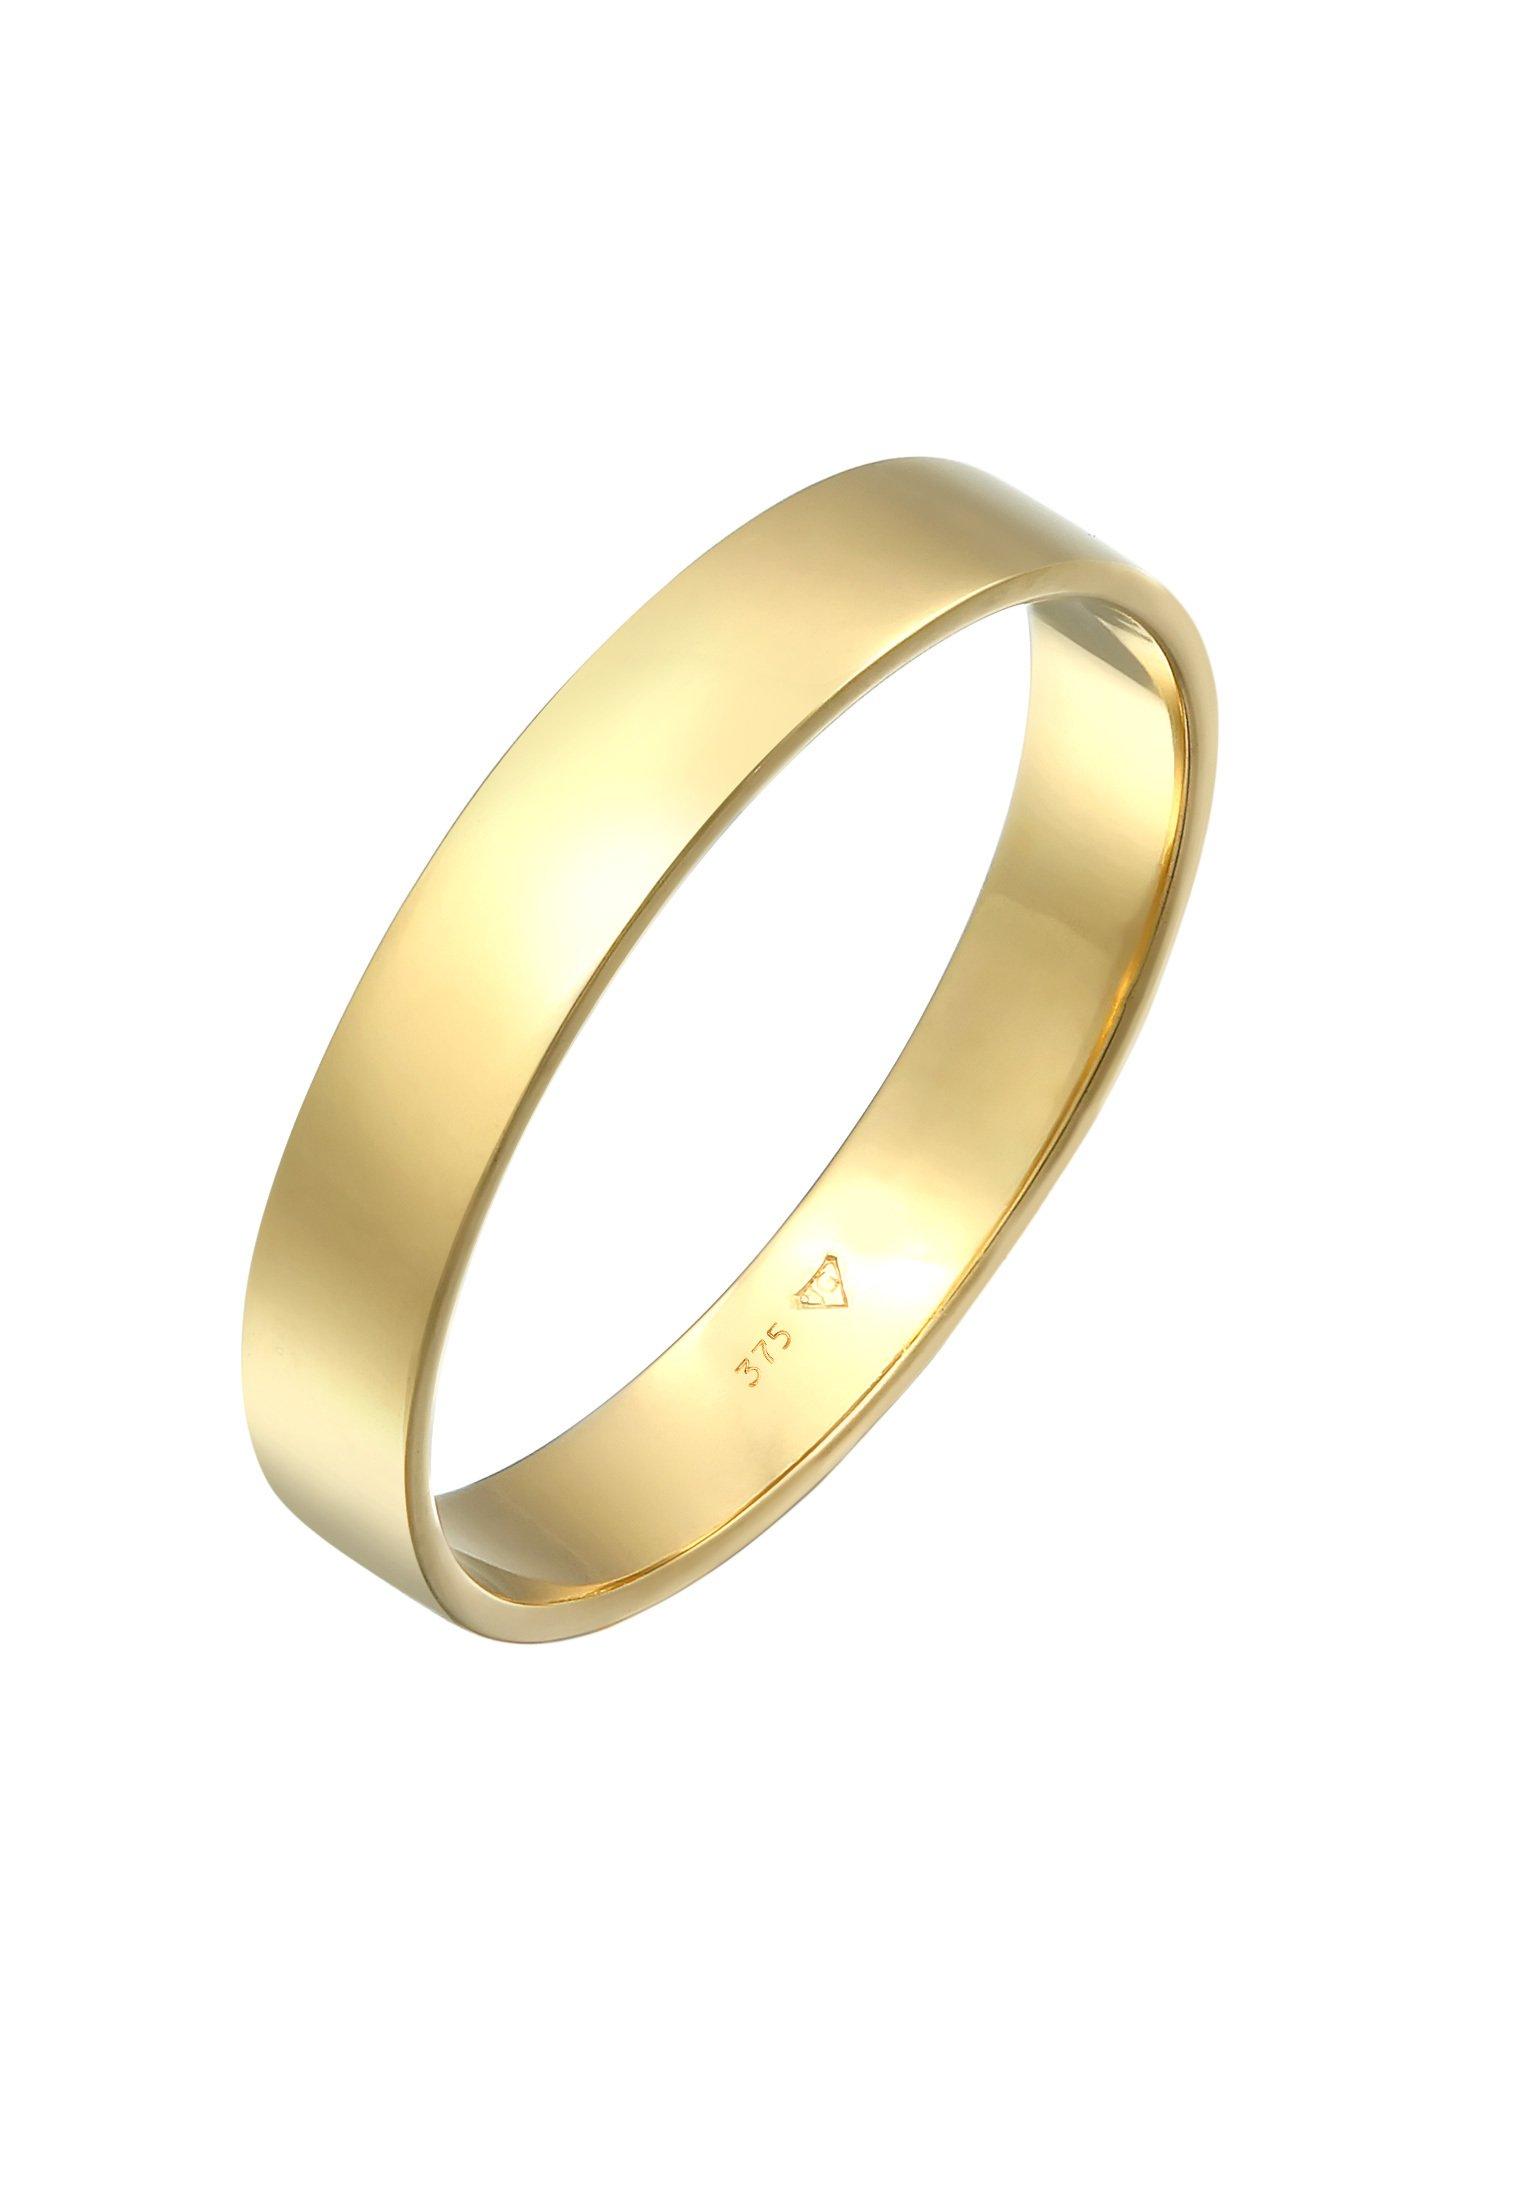 Ring Bandring Ring Freundschaftsring 375 Gelbgold Damen Gold 64mm von Kuzzoi